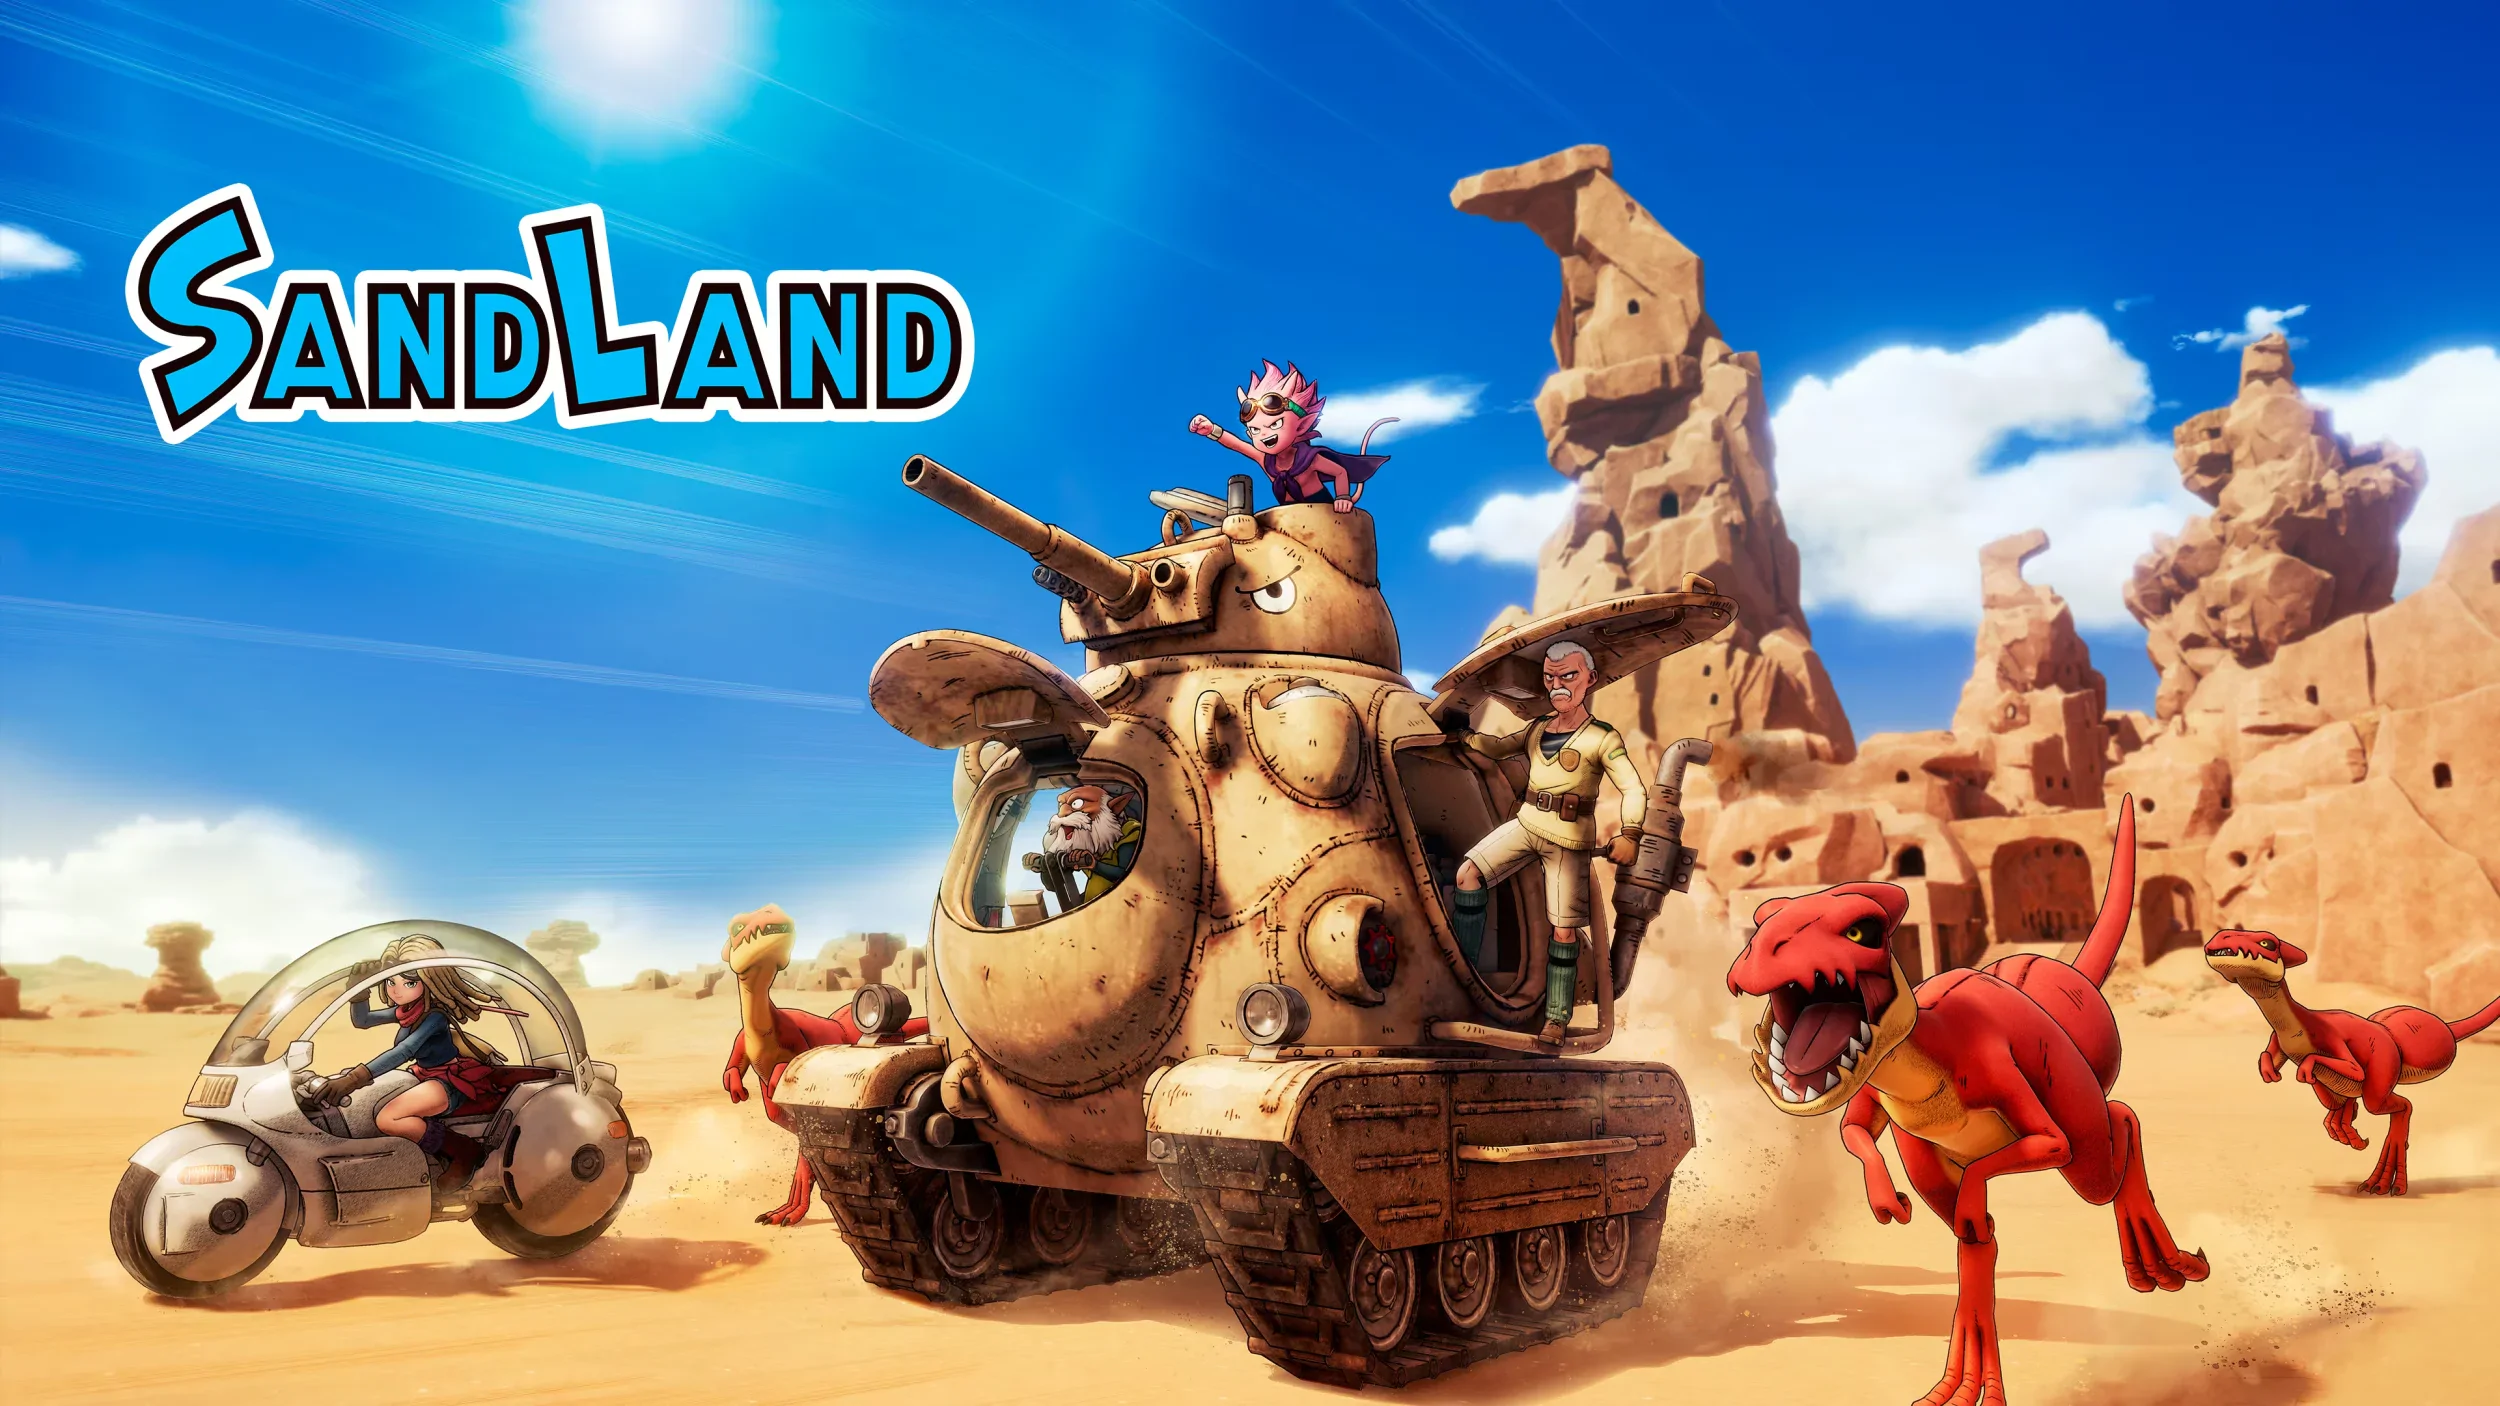 Sand Land – recenzja gry. Piaskowy sen Akiry Toriyamy